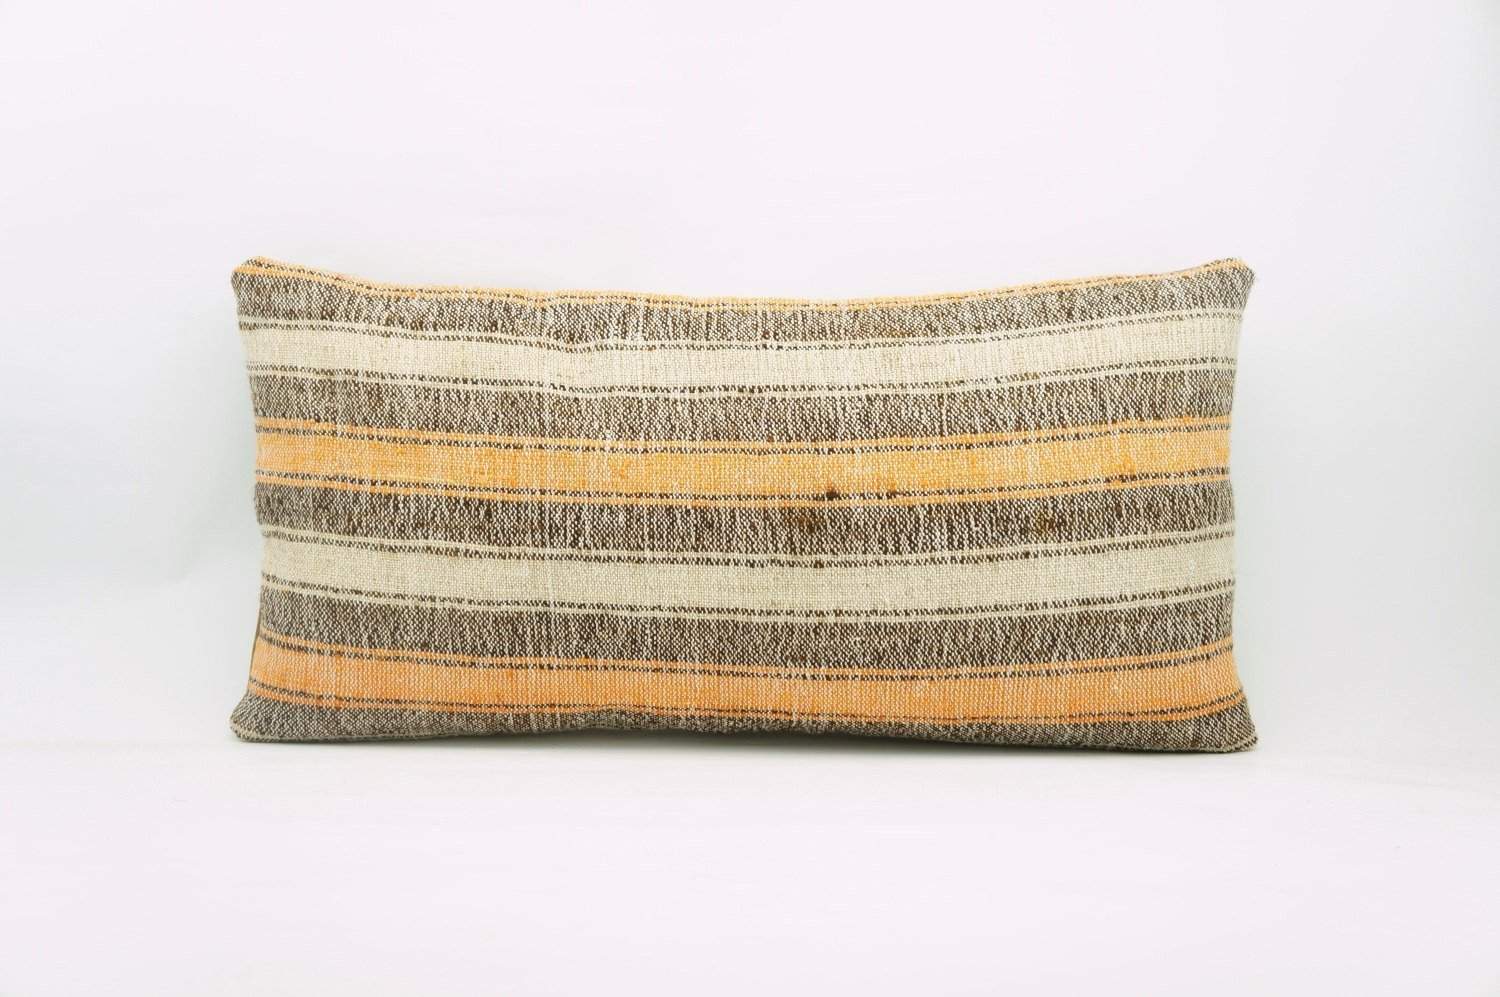 12x24 Vintage Hand Woven Kilim Pillow Lumbar Bohemian pillow case, Modern home decor  orange white brown  striped 963 - kilimpillowstore
 - 1